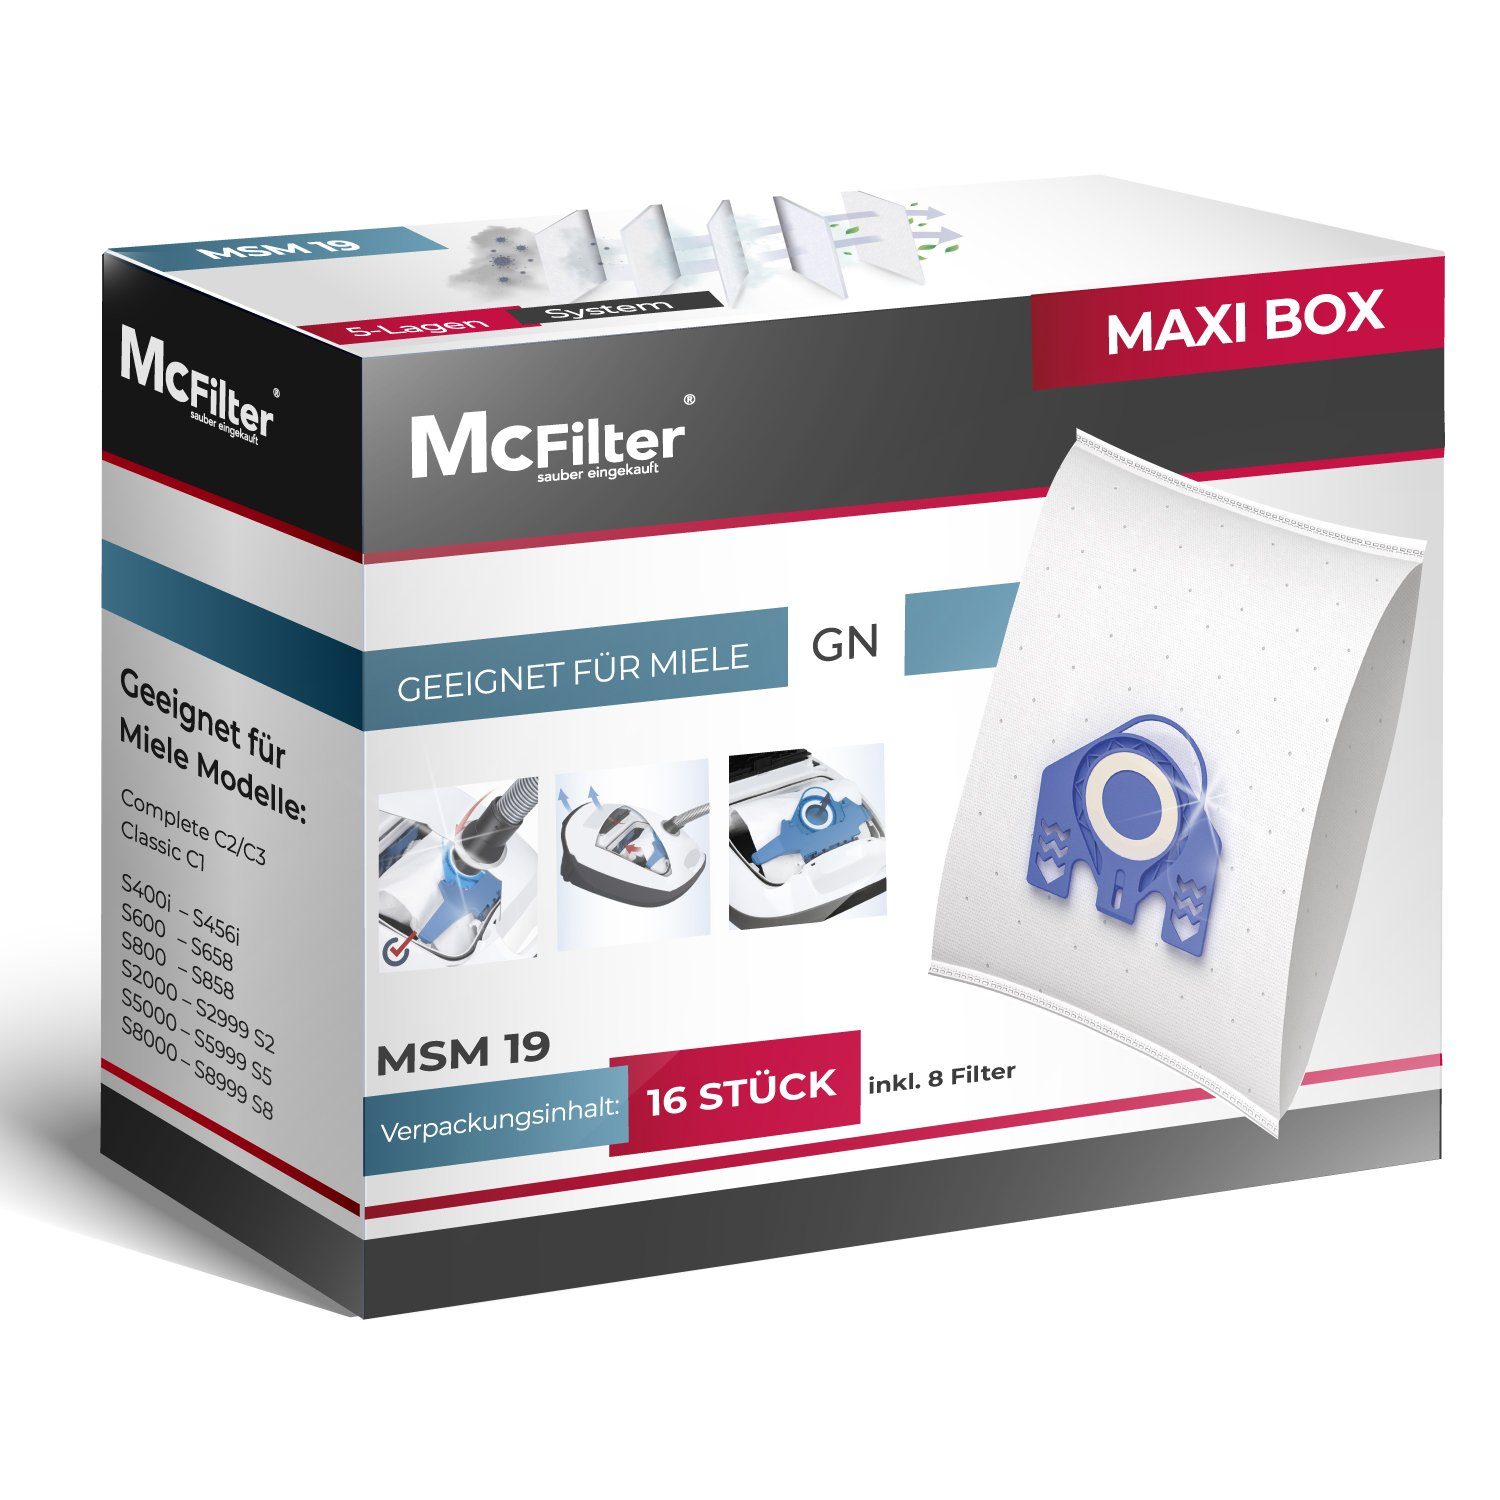 McFilter Staubsaugerbeutel >MAXI BOX< (16+8), passend für Miele GN 3D  Efficiency Staubsauger, inkl. 8 Filter, 16 St., Top Alternative zu Original  9917730, wie Miele 10408410